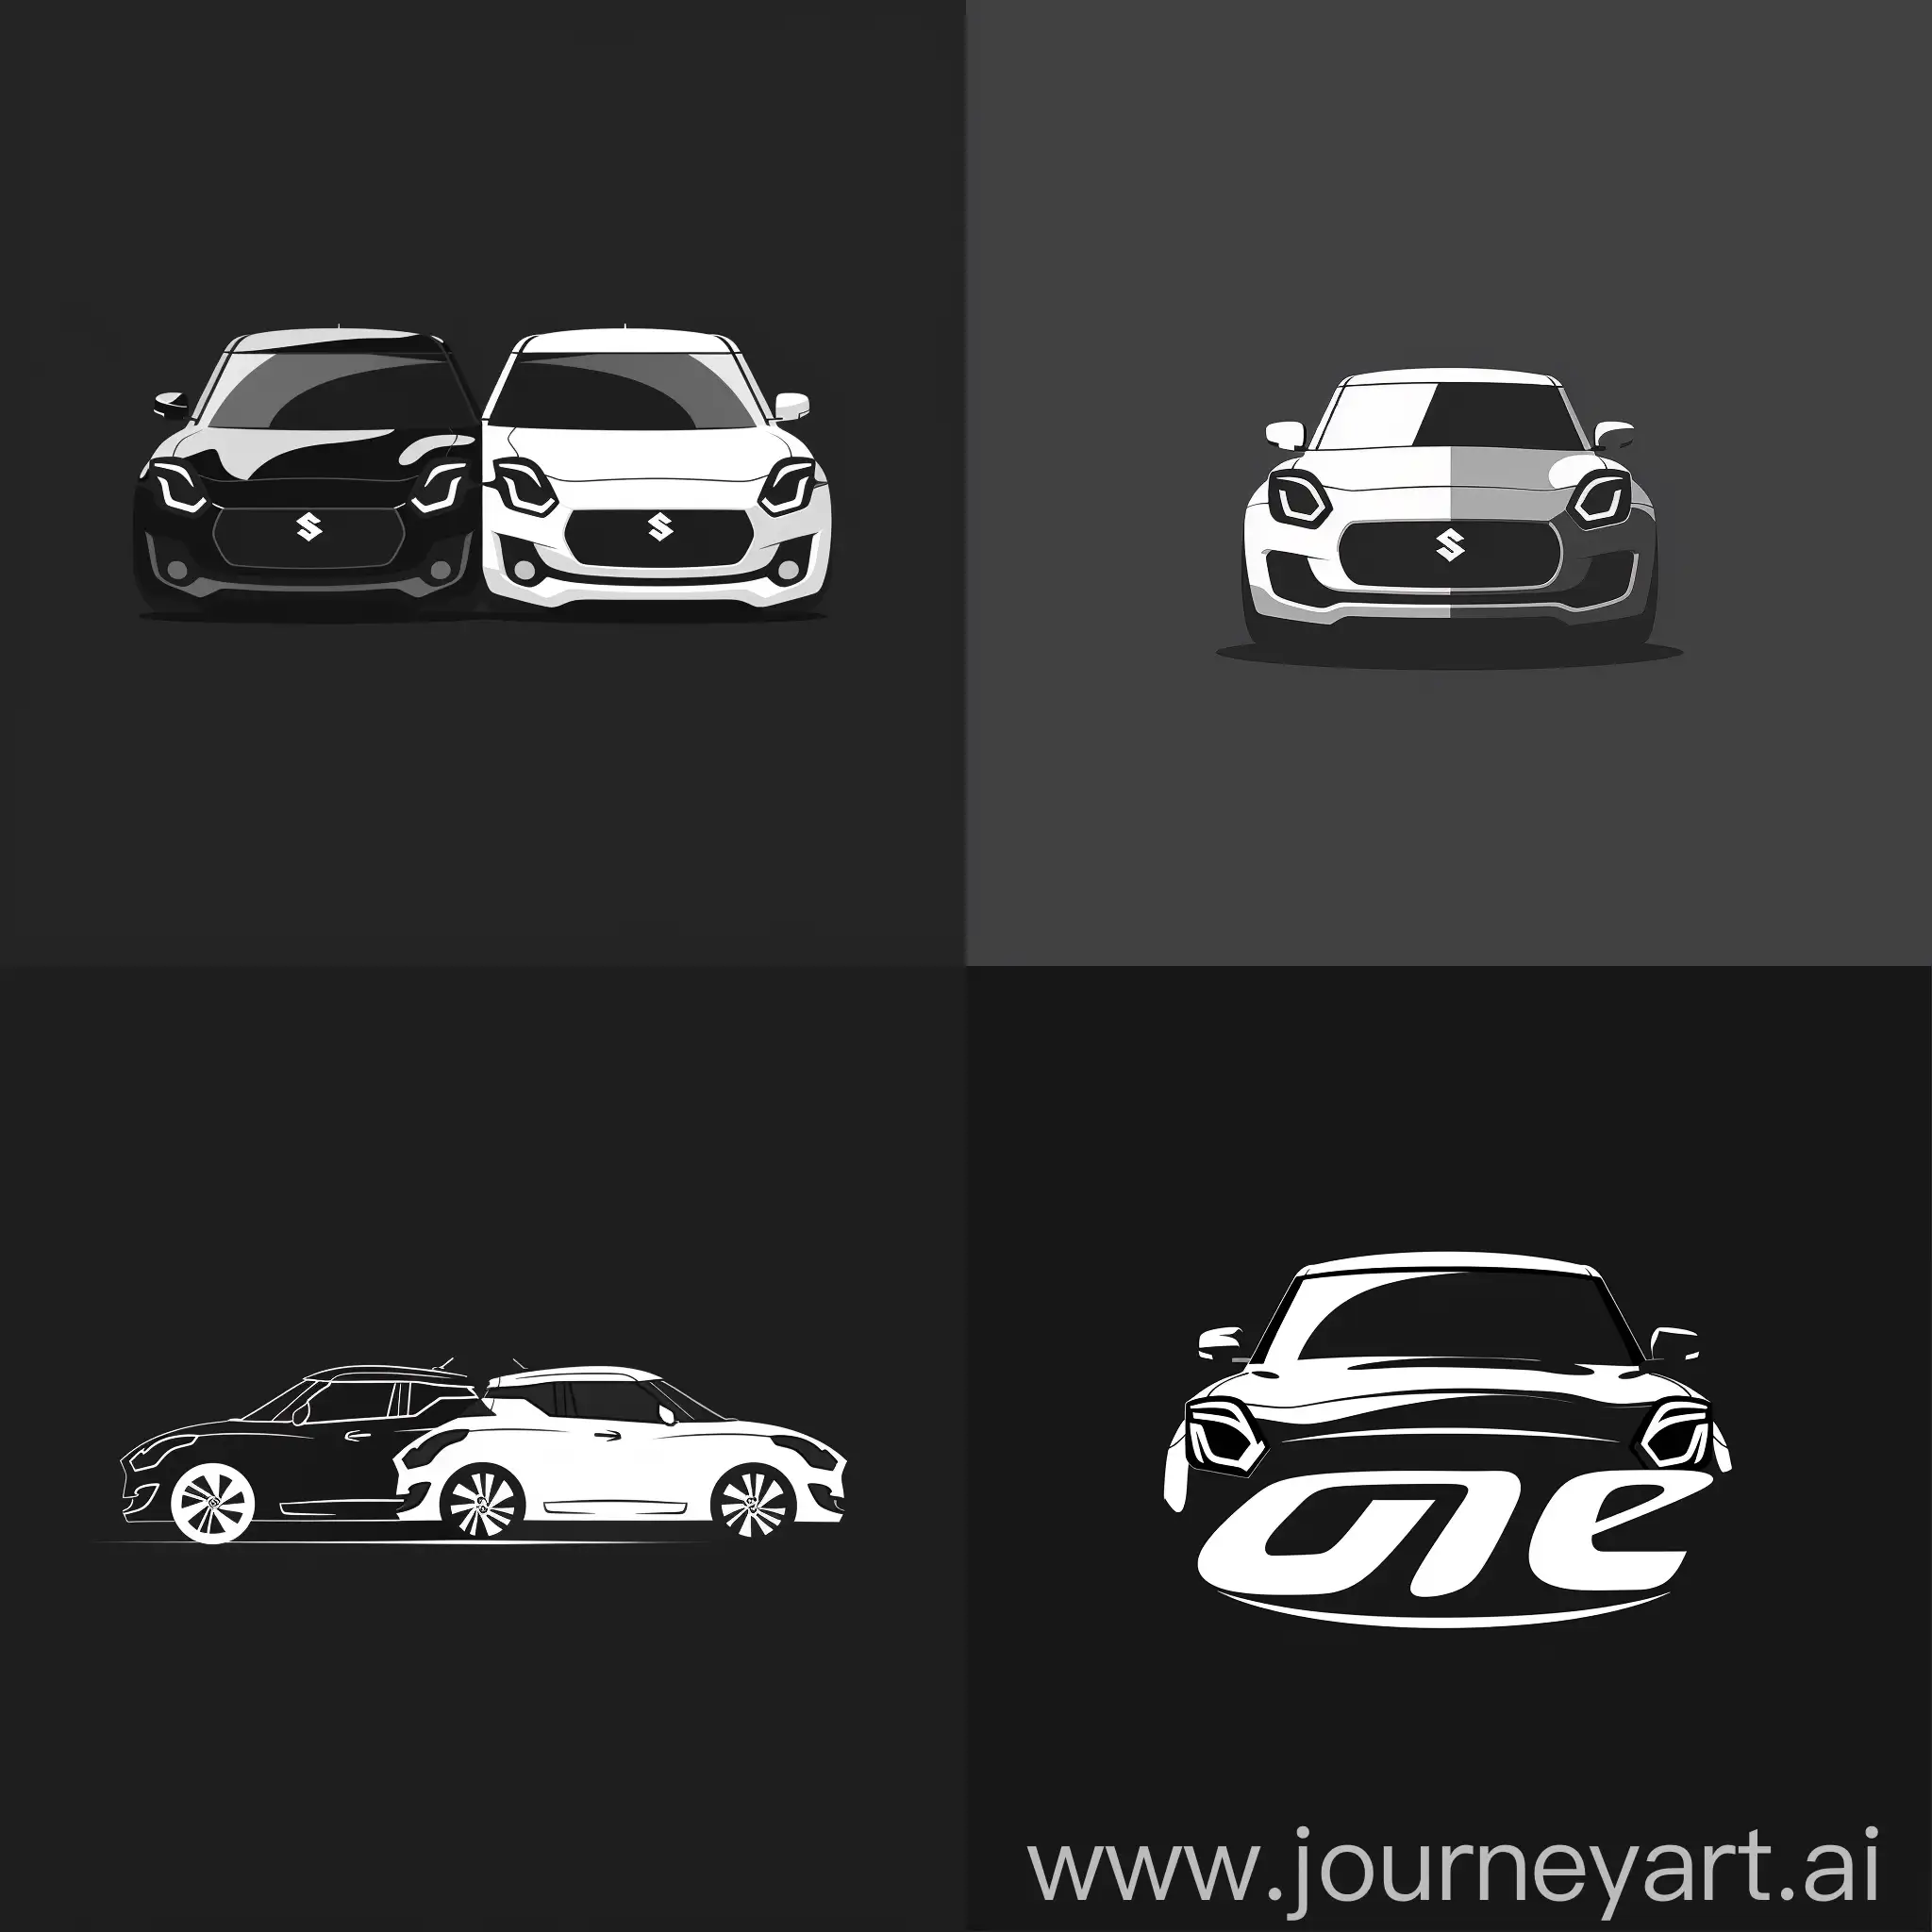 Minimalistic-Swift-Car-Logo-in-Black-and-White